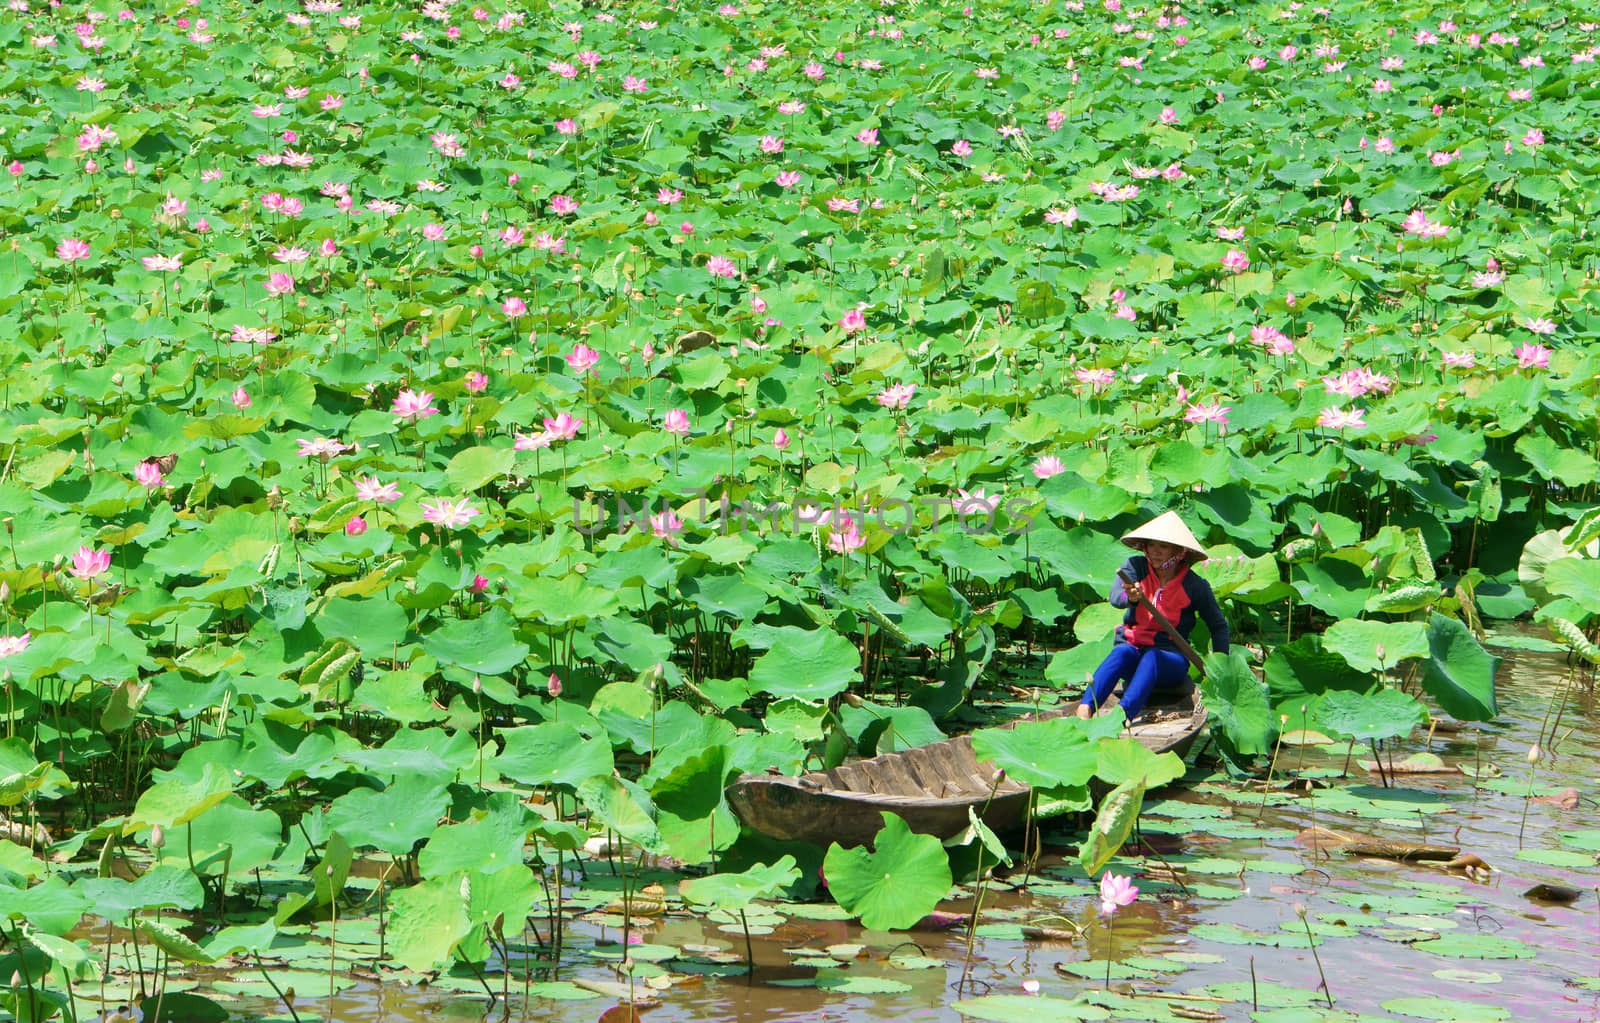 Vietnamese village, row boat, lotus flower, lotus pond by xuanhuongho